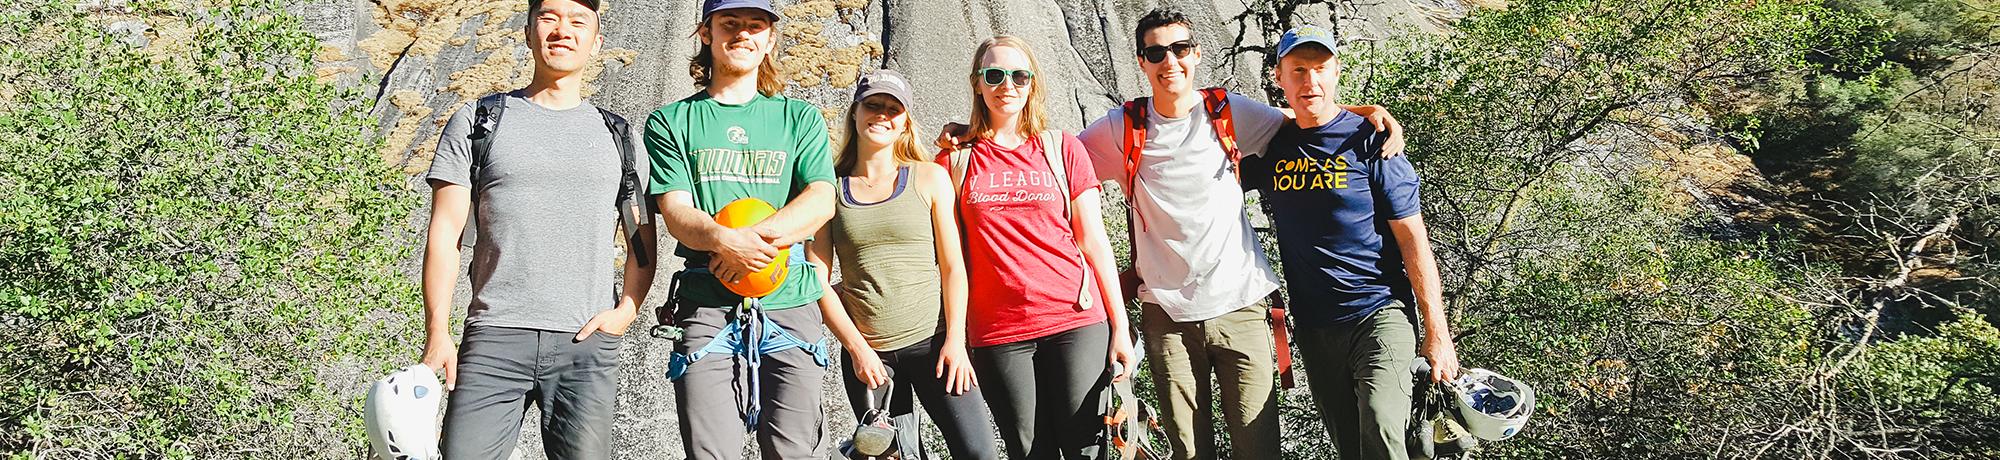 uc davis outdoor adventure group rock climbing toghether